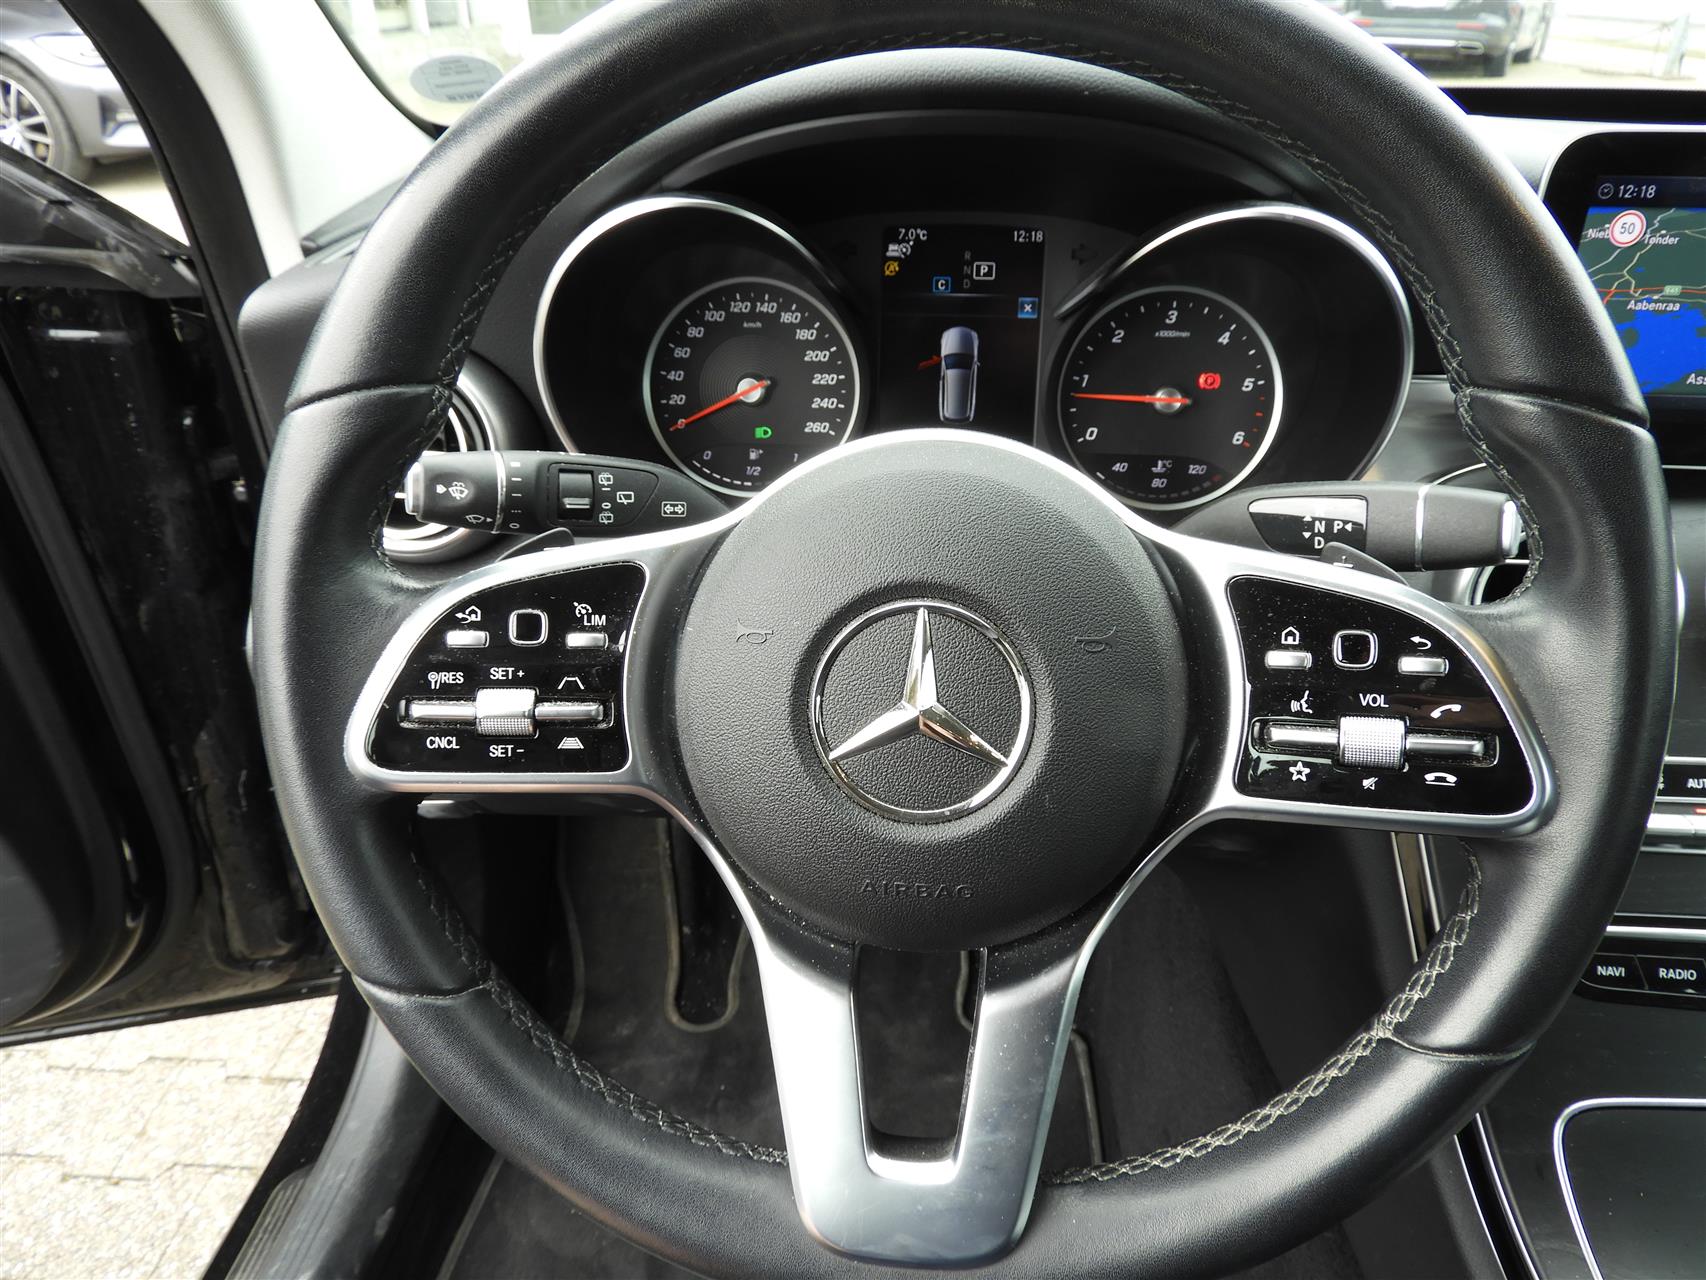 Billede af Mercedes-Benz C220 d T 2,0 CDI Progressive 9G-Tronic 194HK Stc Aut.